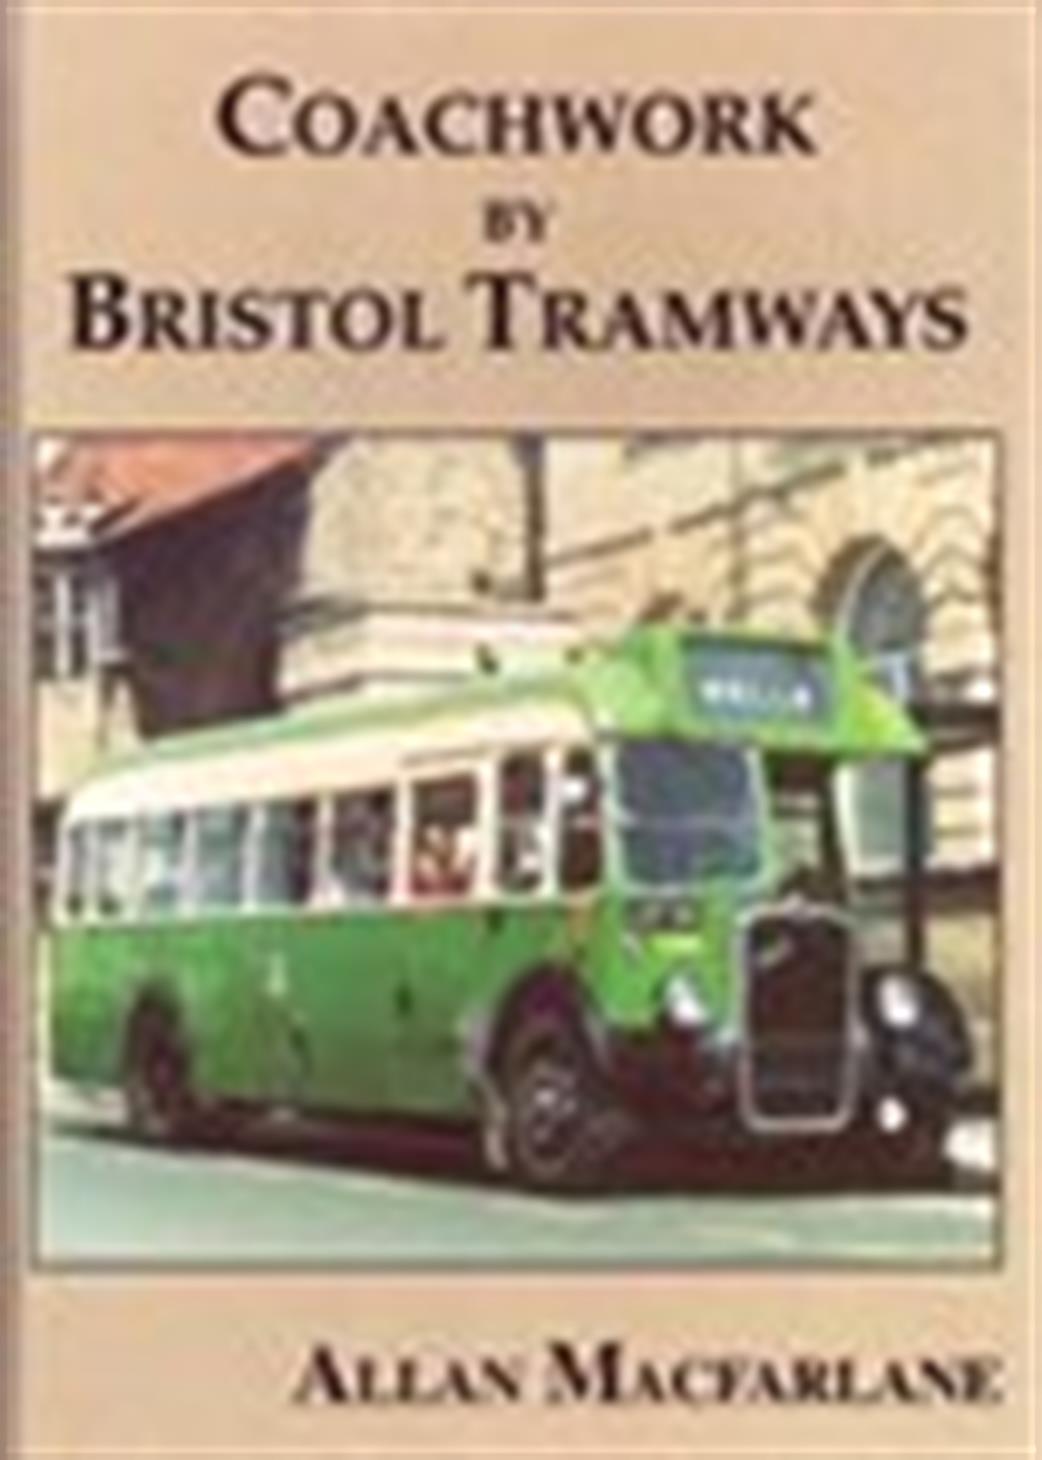 9780948975523 Coachwork by Bristol Tramways by Allan Macfarlane